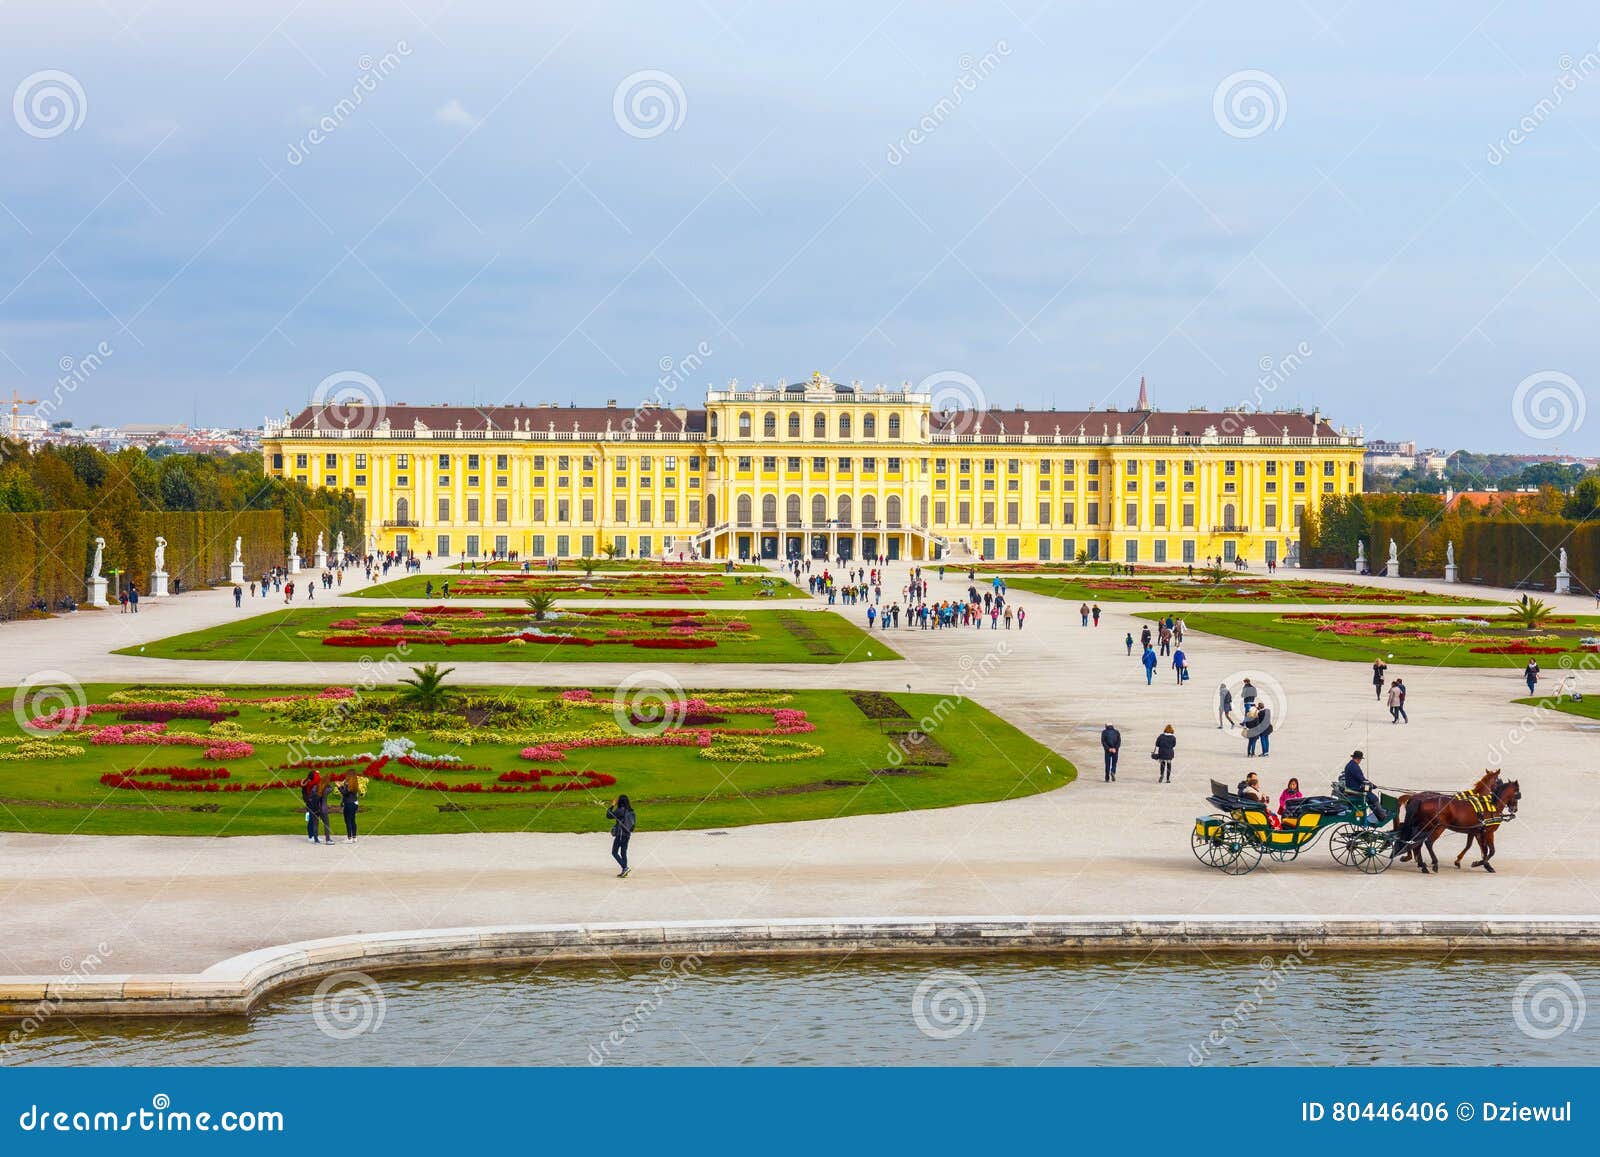 Schonbrunn Palace In Vienna Editorial Photo Image Of Habsburg